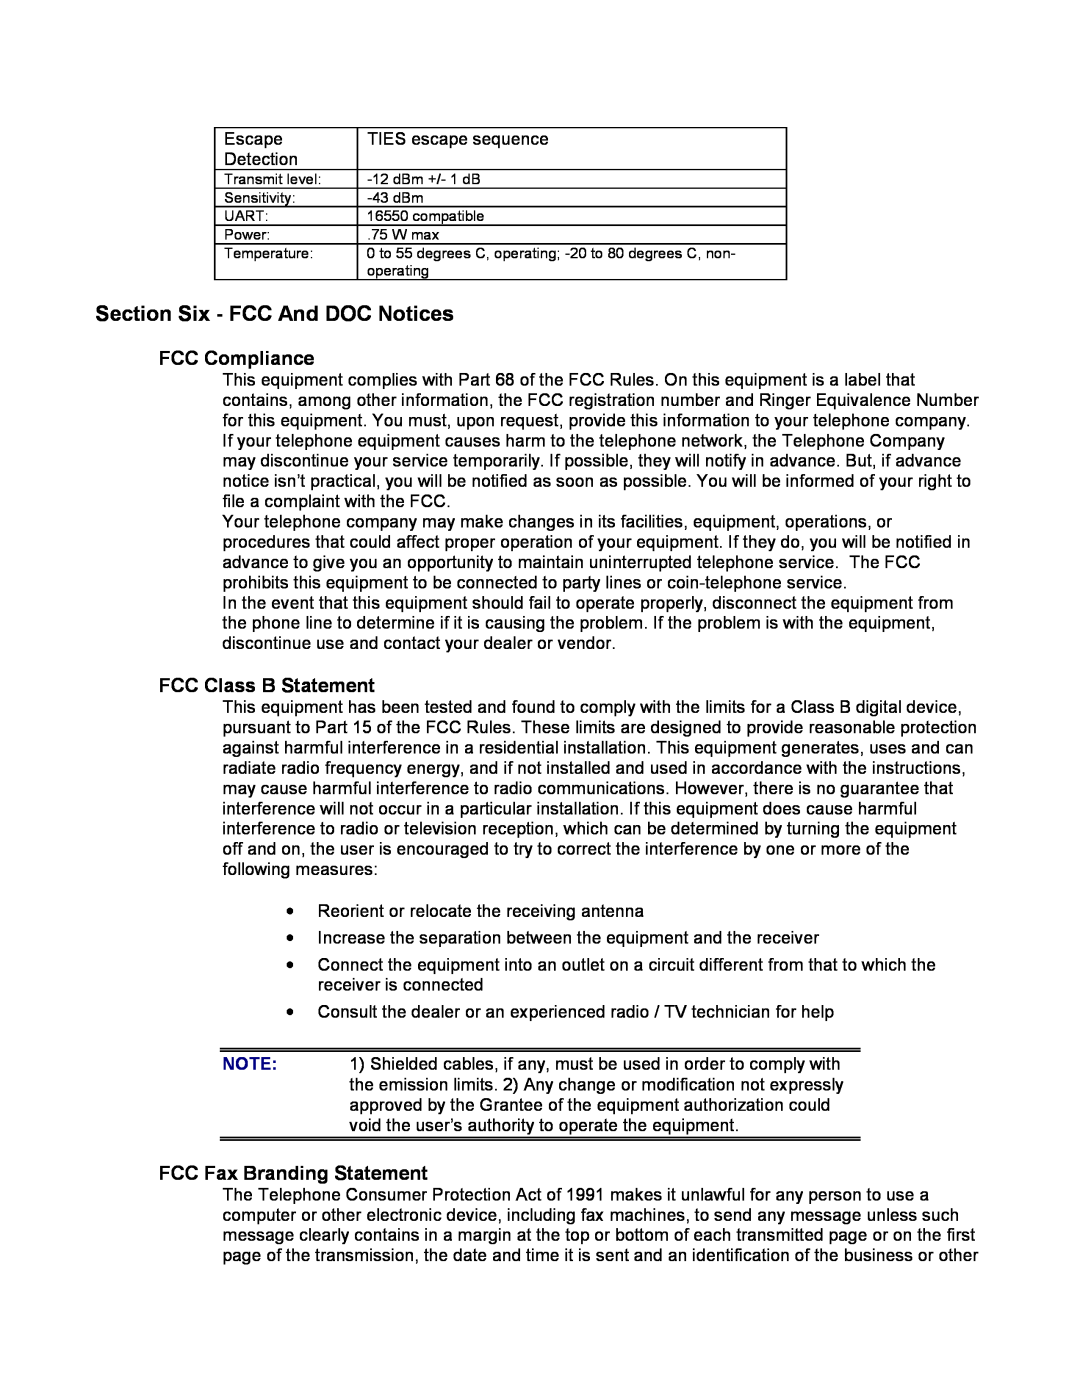 HP 8777c (LA), 8705i Section Six - FCC And DOC Notices, FCC Compliance, FCC Class B Statement, FCC Fax Branding Statement 